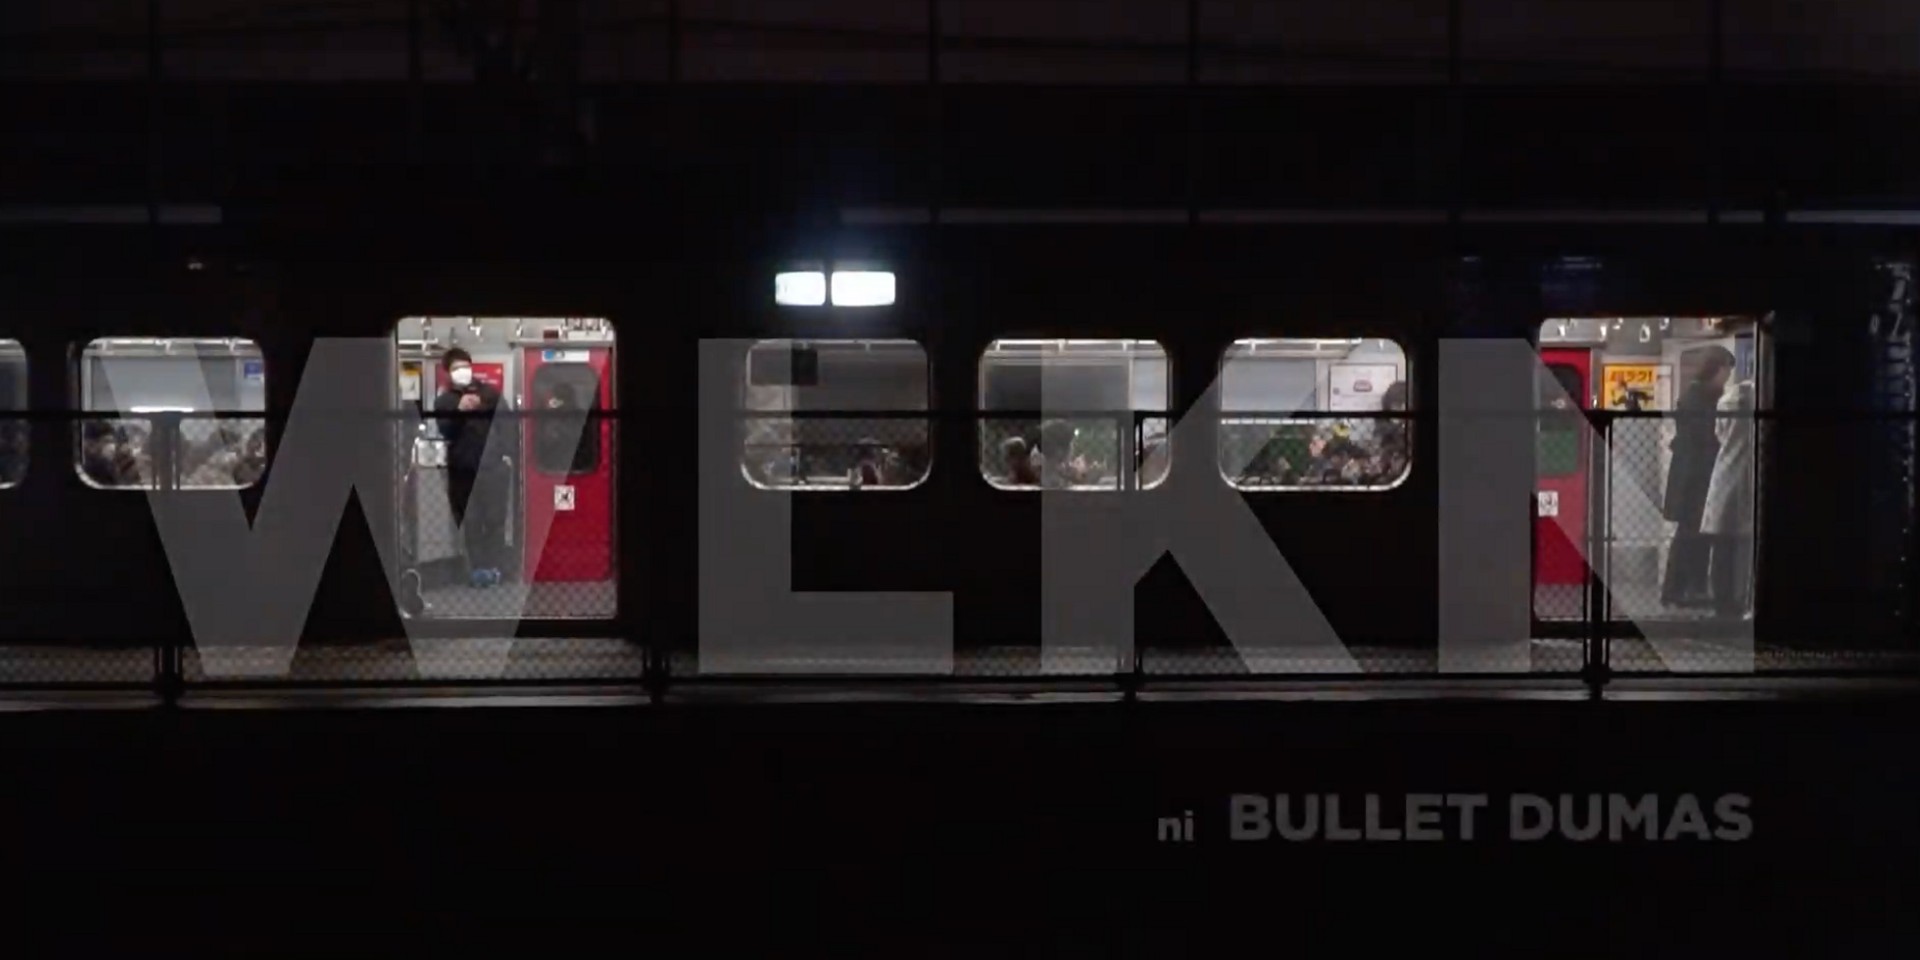 Bullet Dumas returns with surprise music video, 'WLKN' – watch